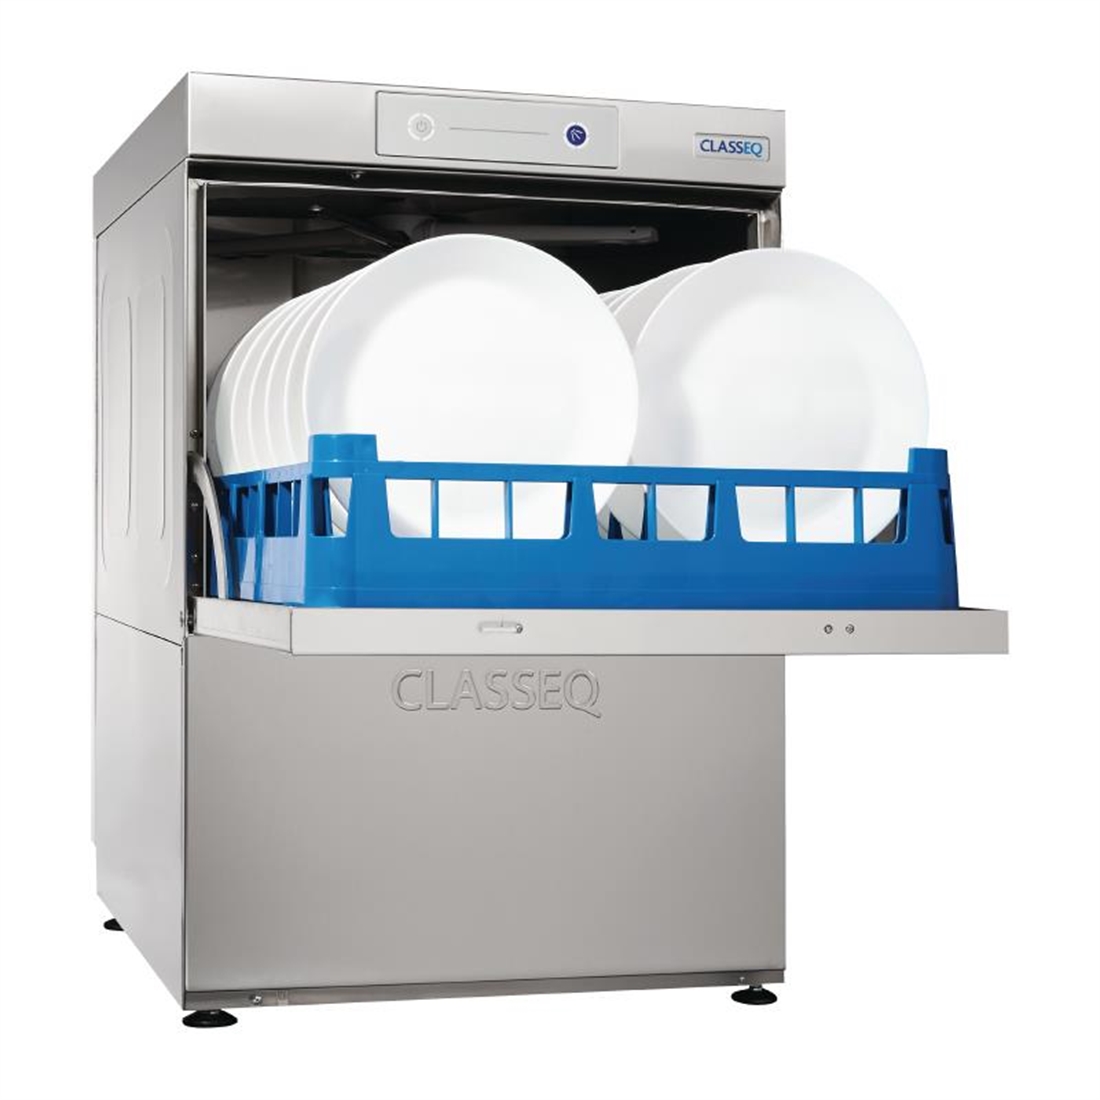 Classeq D500 Dishwasher